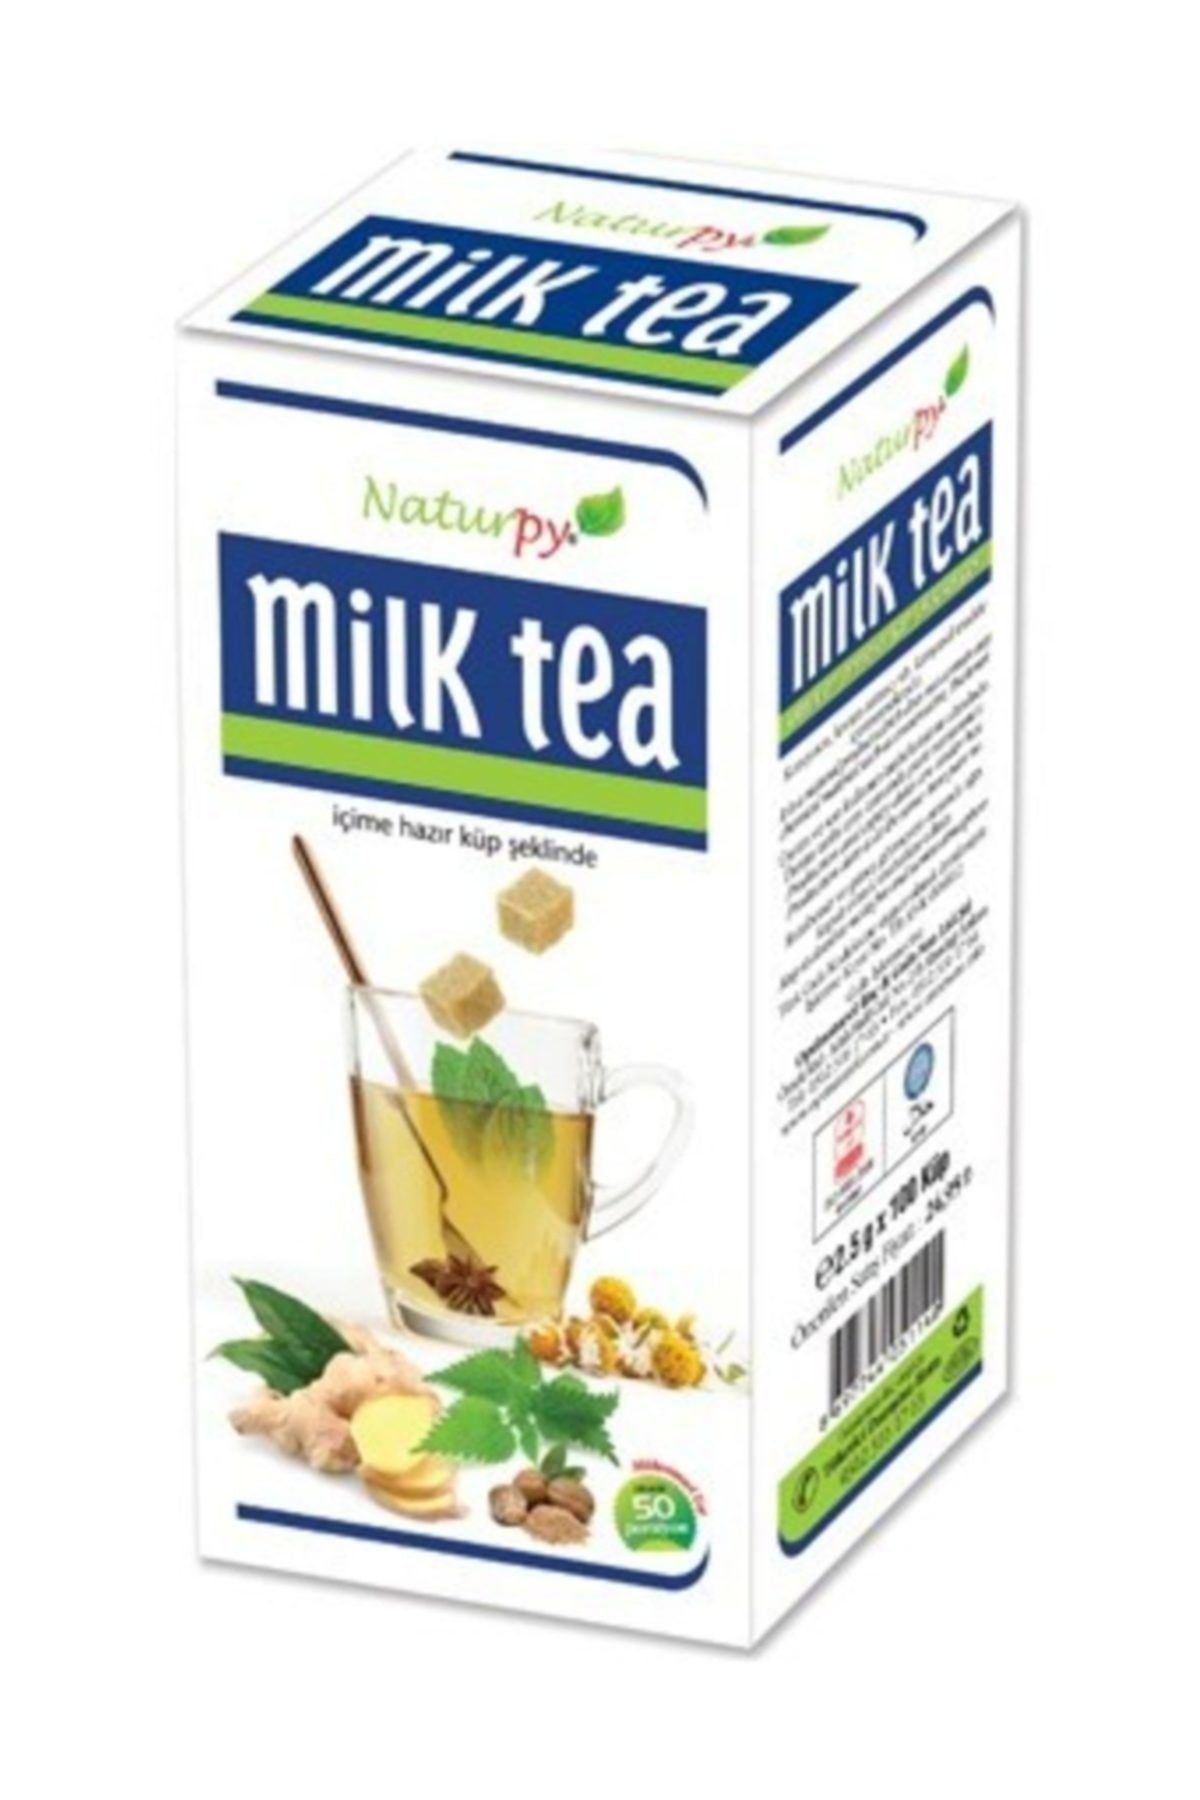 Naturpy Milk Tea 250 gr